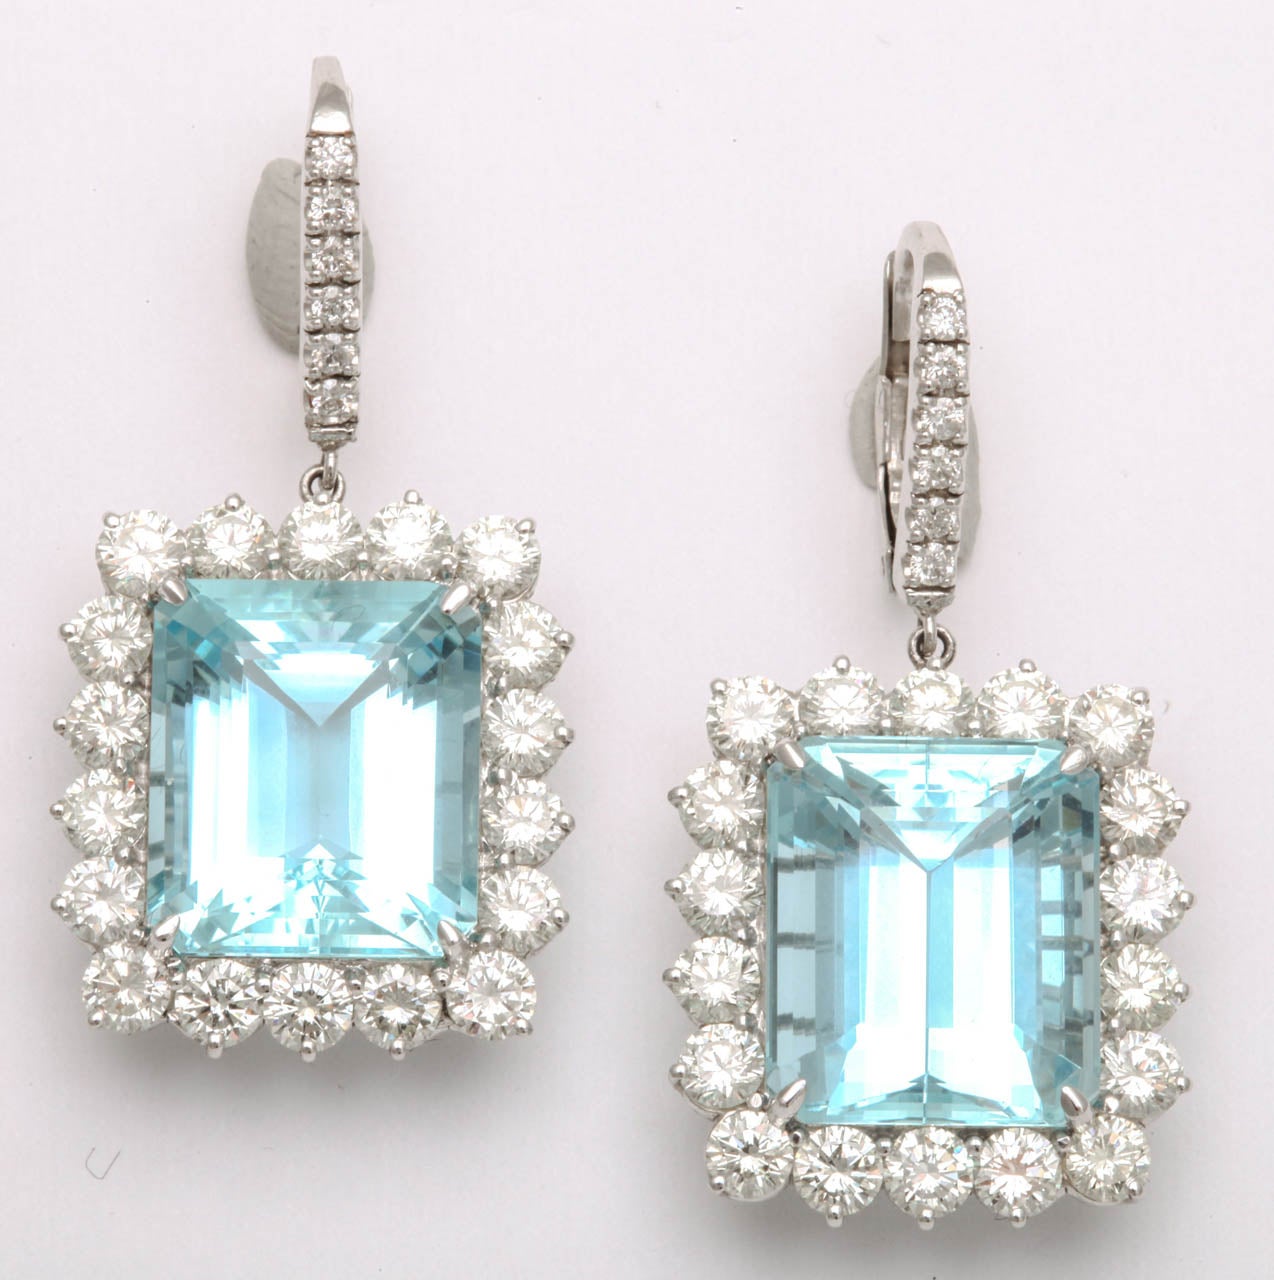 Diamond and Aquamarine Platinum Earrings.
5.42ct Diamonds approx. 
24ct Aquamarine approx. 
Length - 1 1/2